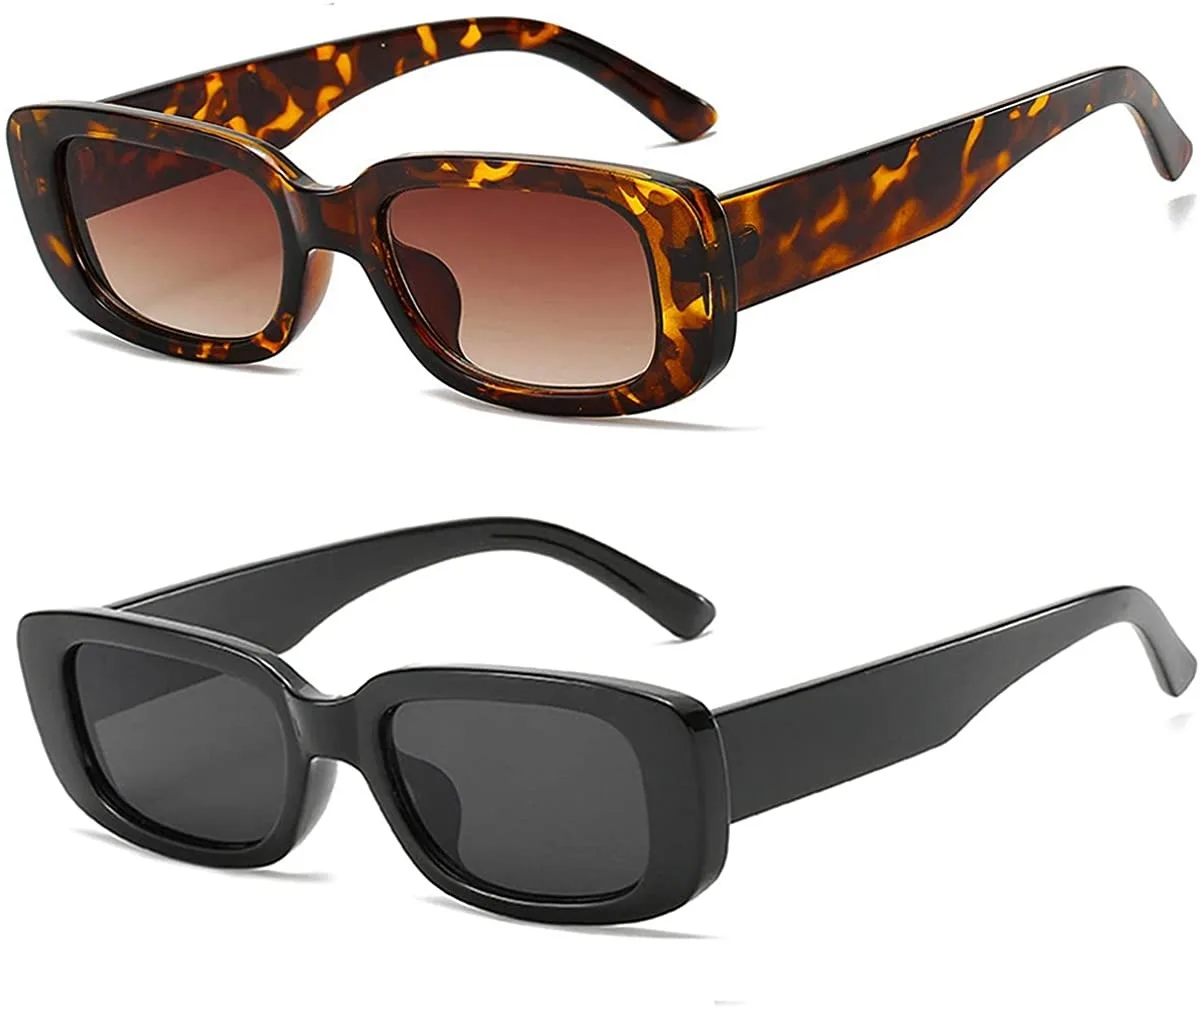 

New Sunglasses -Women Rectangle Square Frame Sun glasses Fashion Sun Glasses Lady Brand Designer Vintage Shades Gafas Oculos, Mix color or custom colors